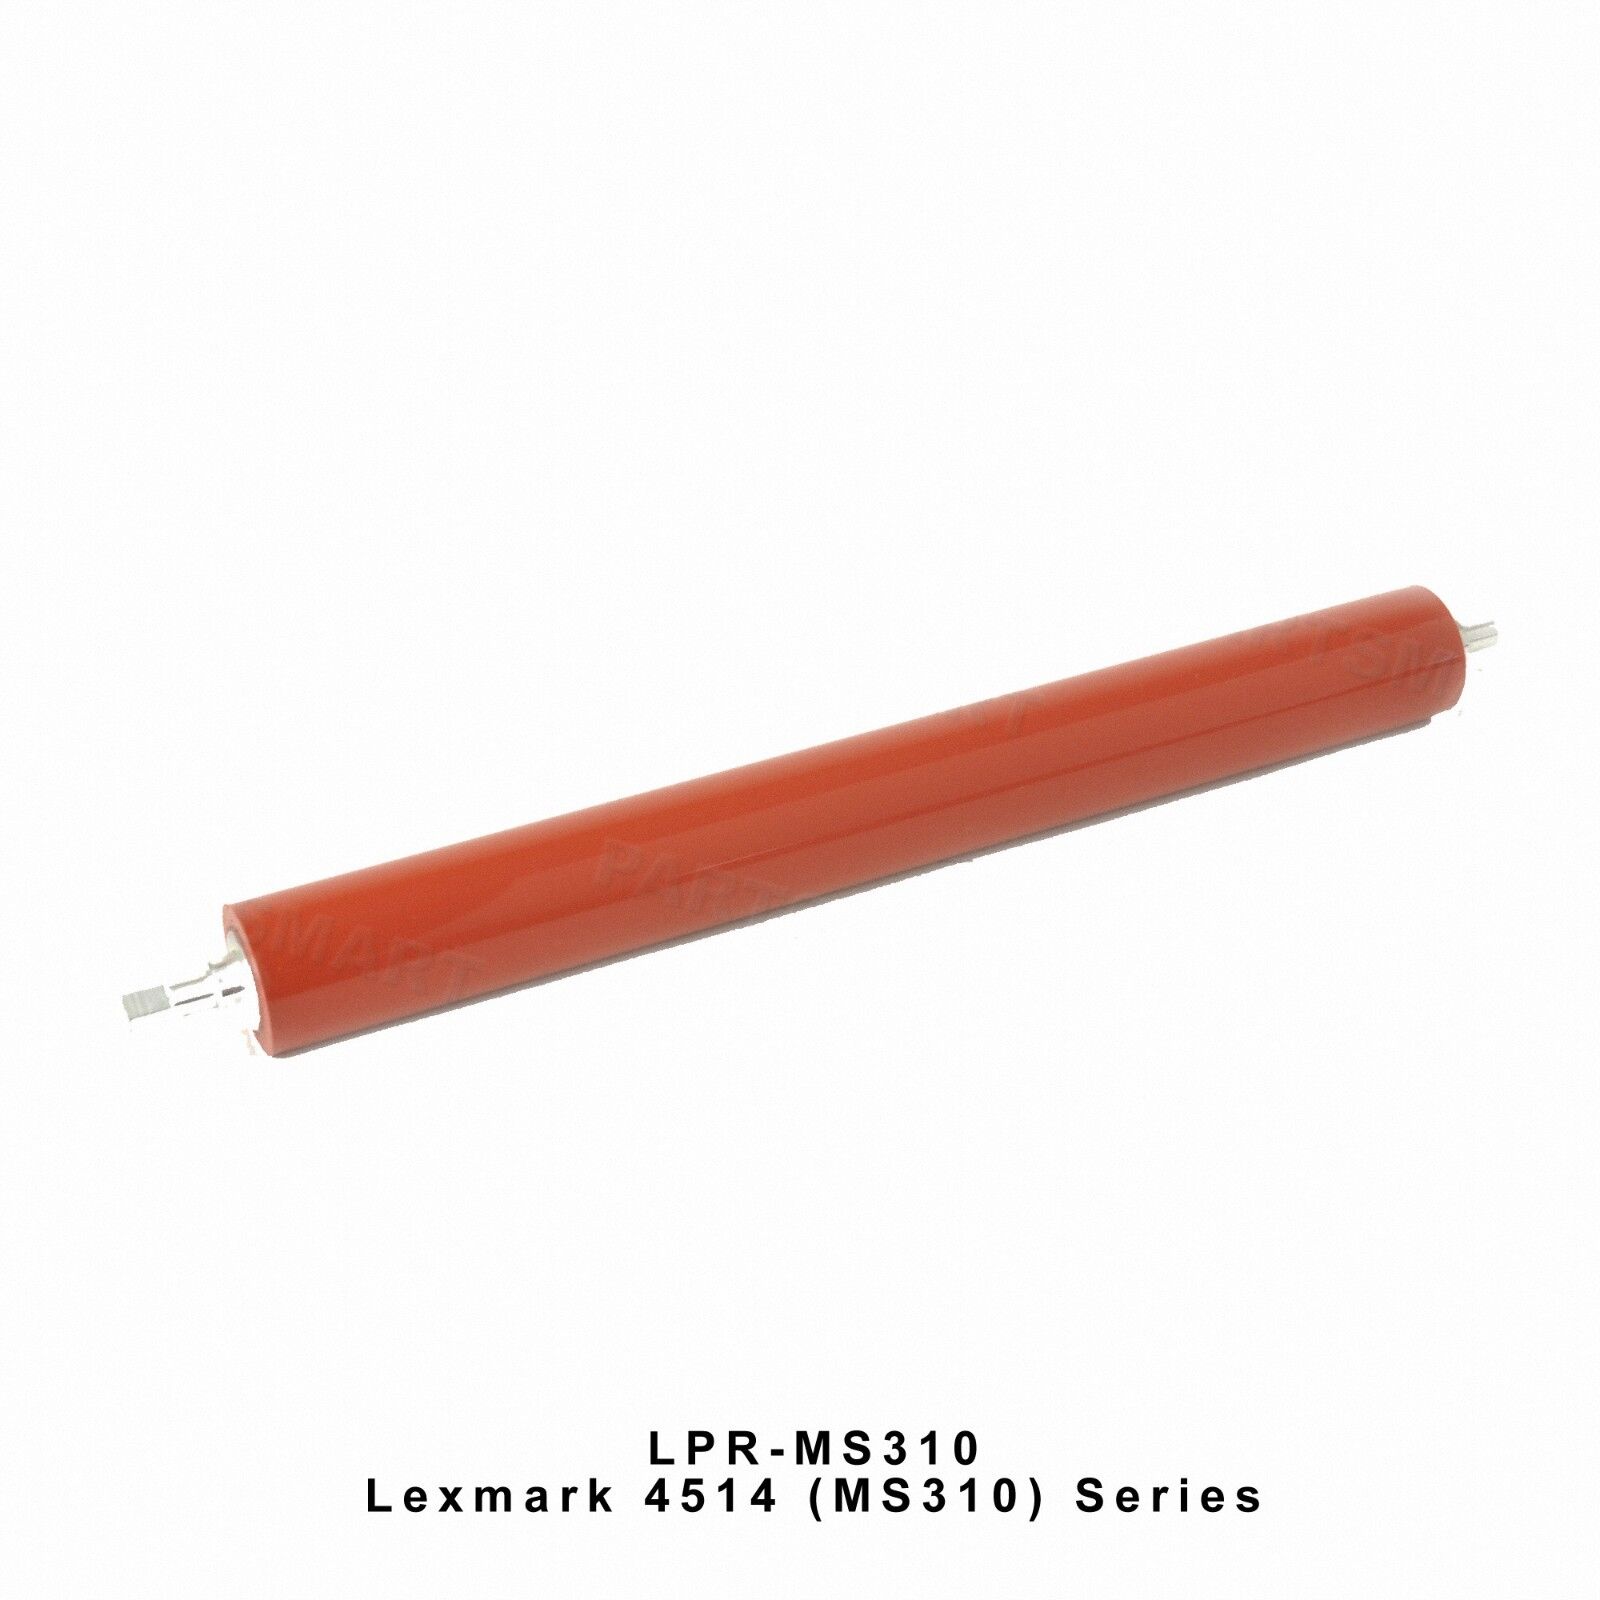 Lexmark 4514 M1140 MS310 MX310 Lower Fuser Pressure Roller LPR-MS310 OEM Quality